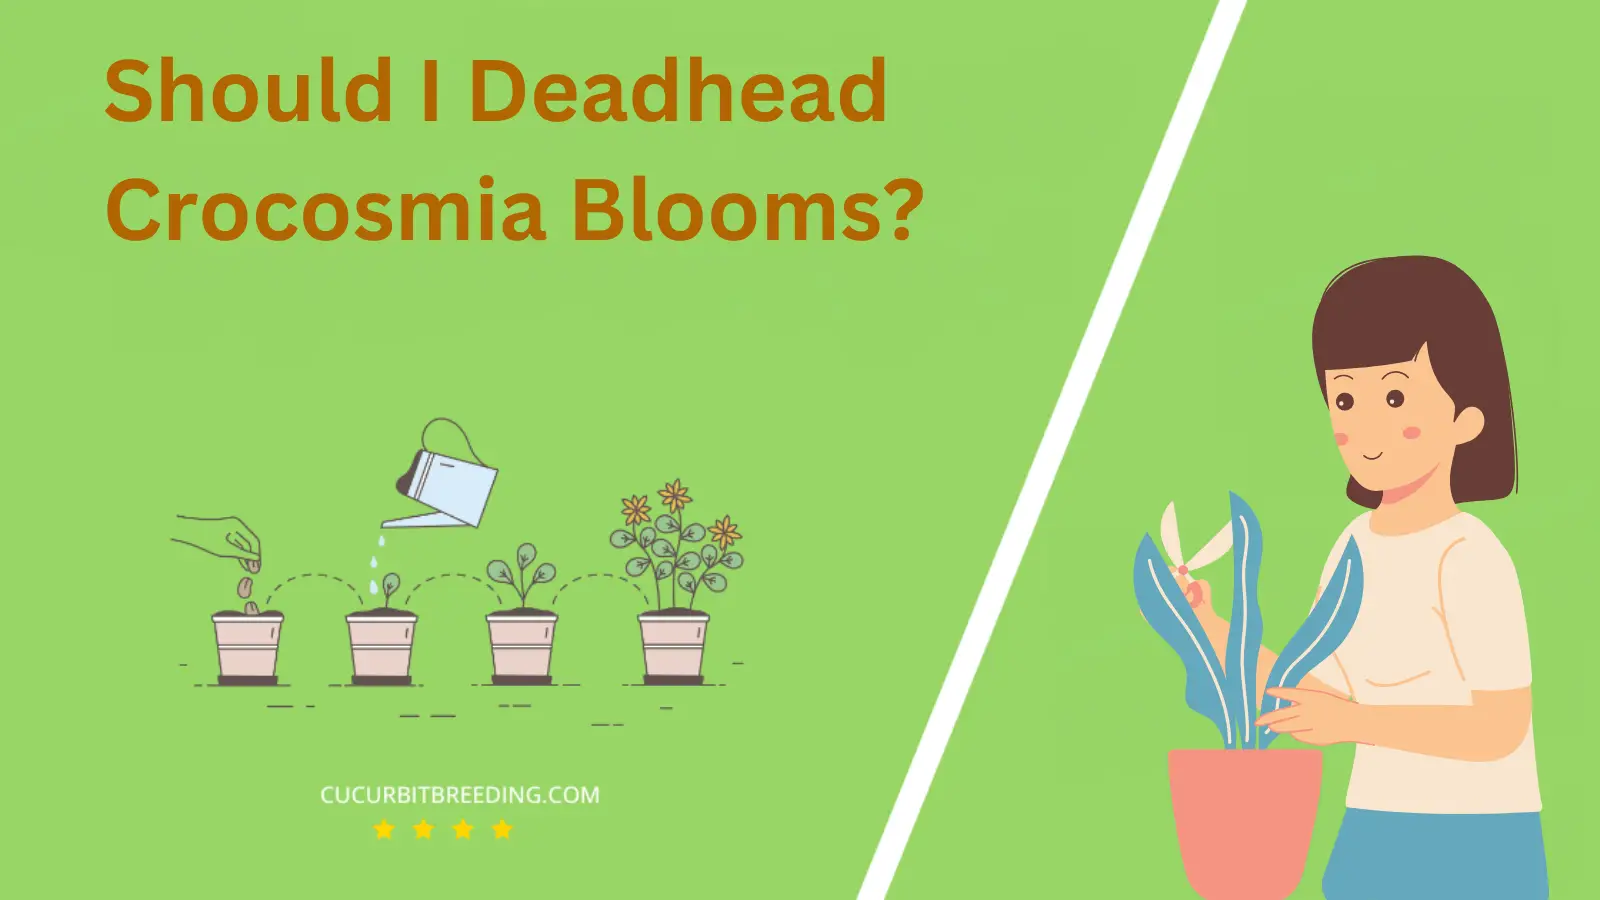 Should I Deadhead Crocosmia Blooms?